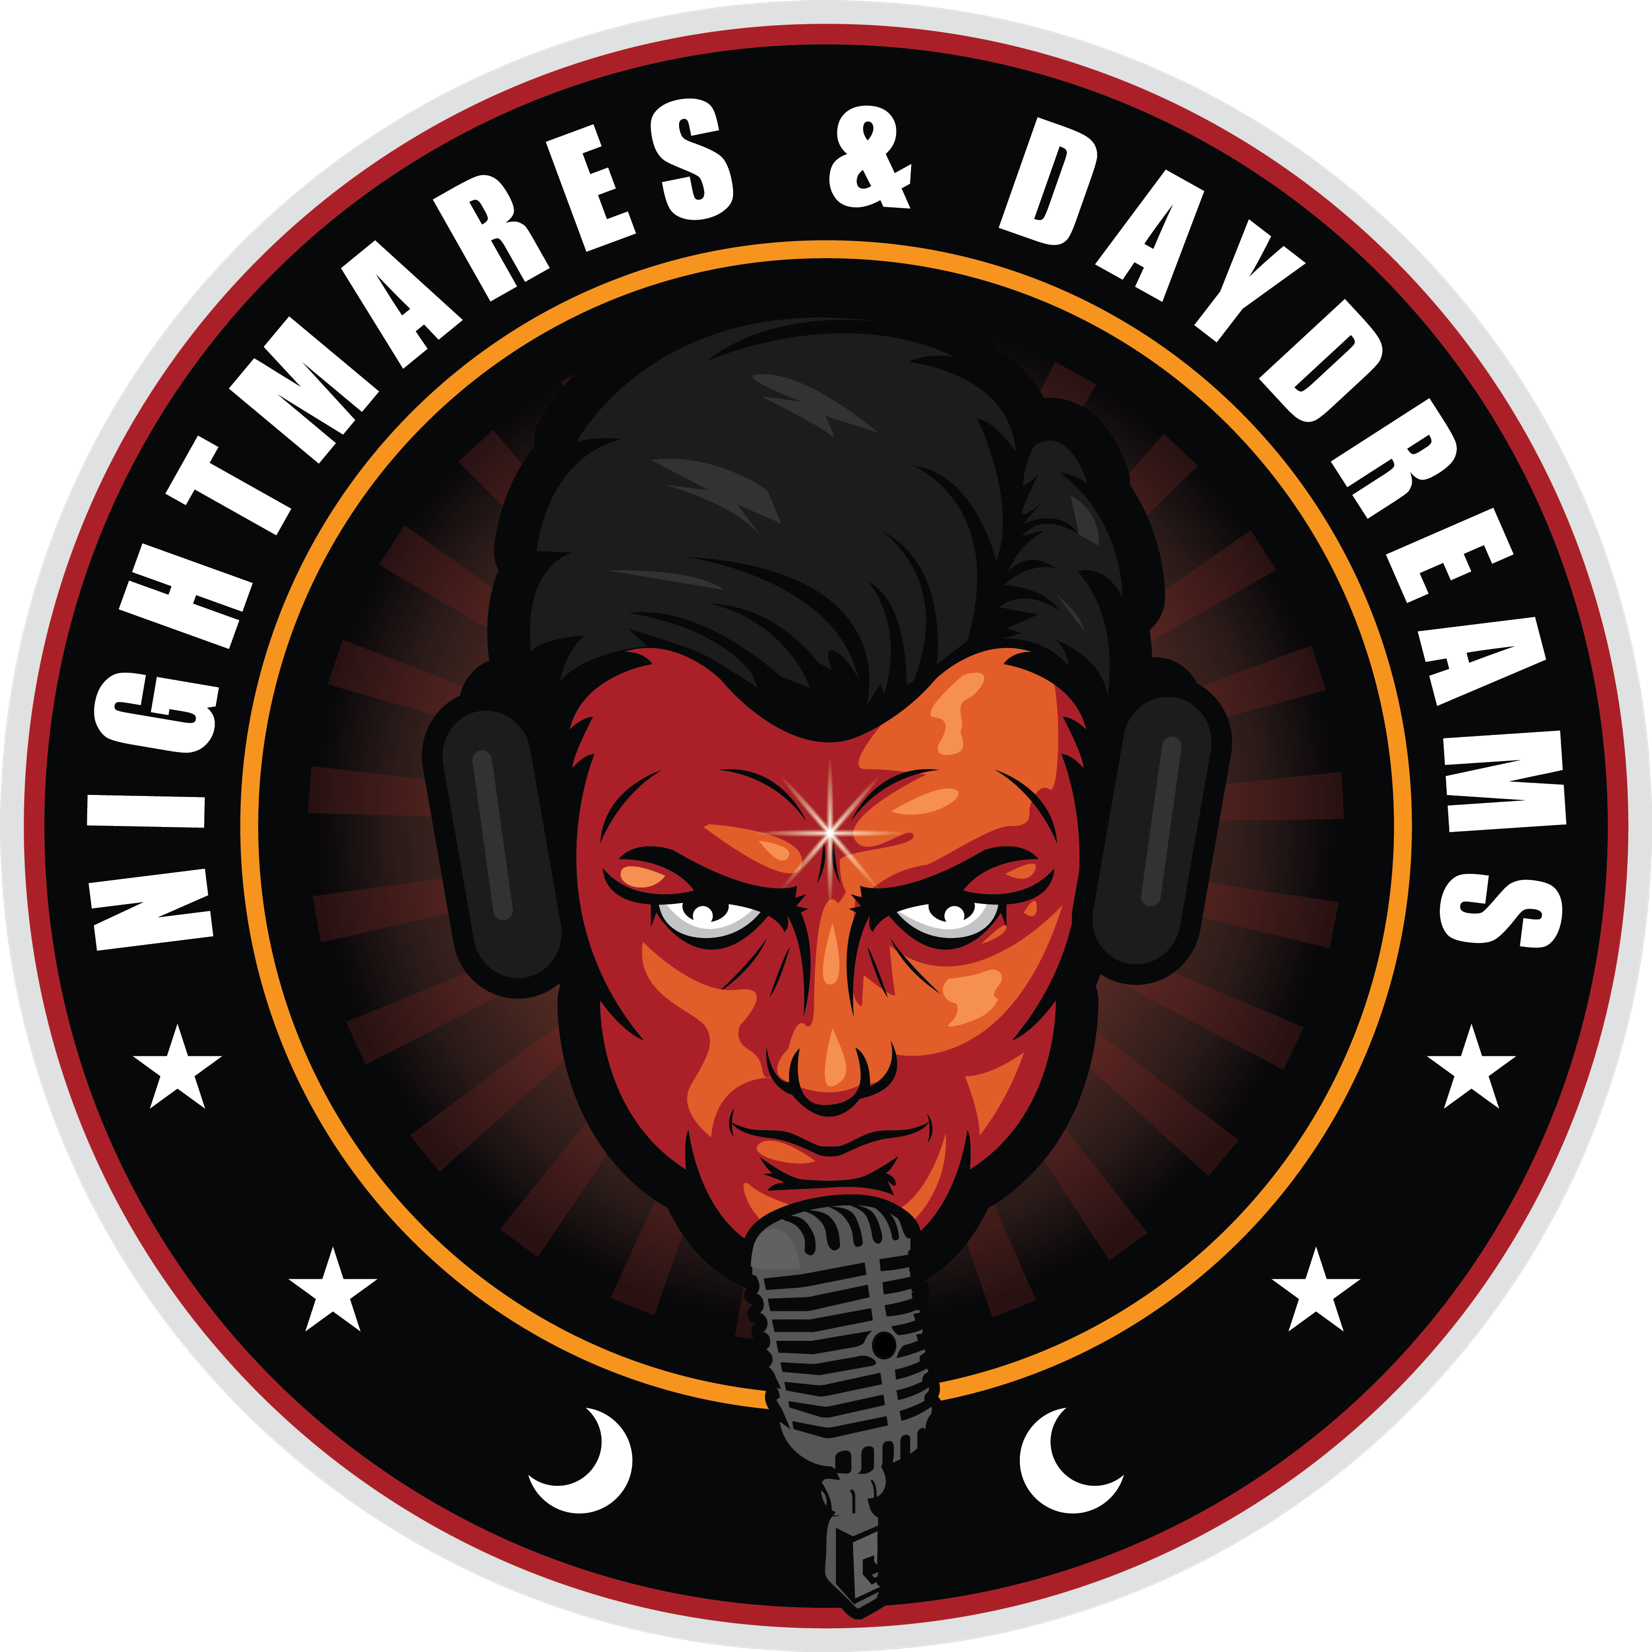 Nightmares & Daydreams Podcast